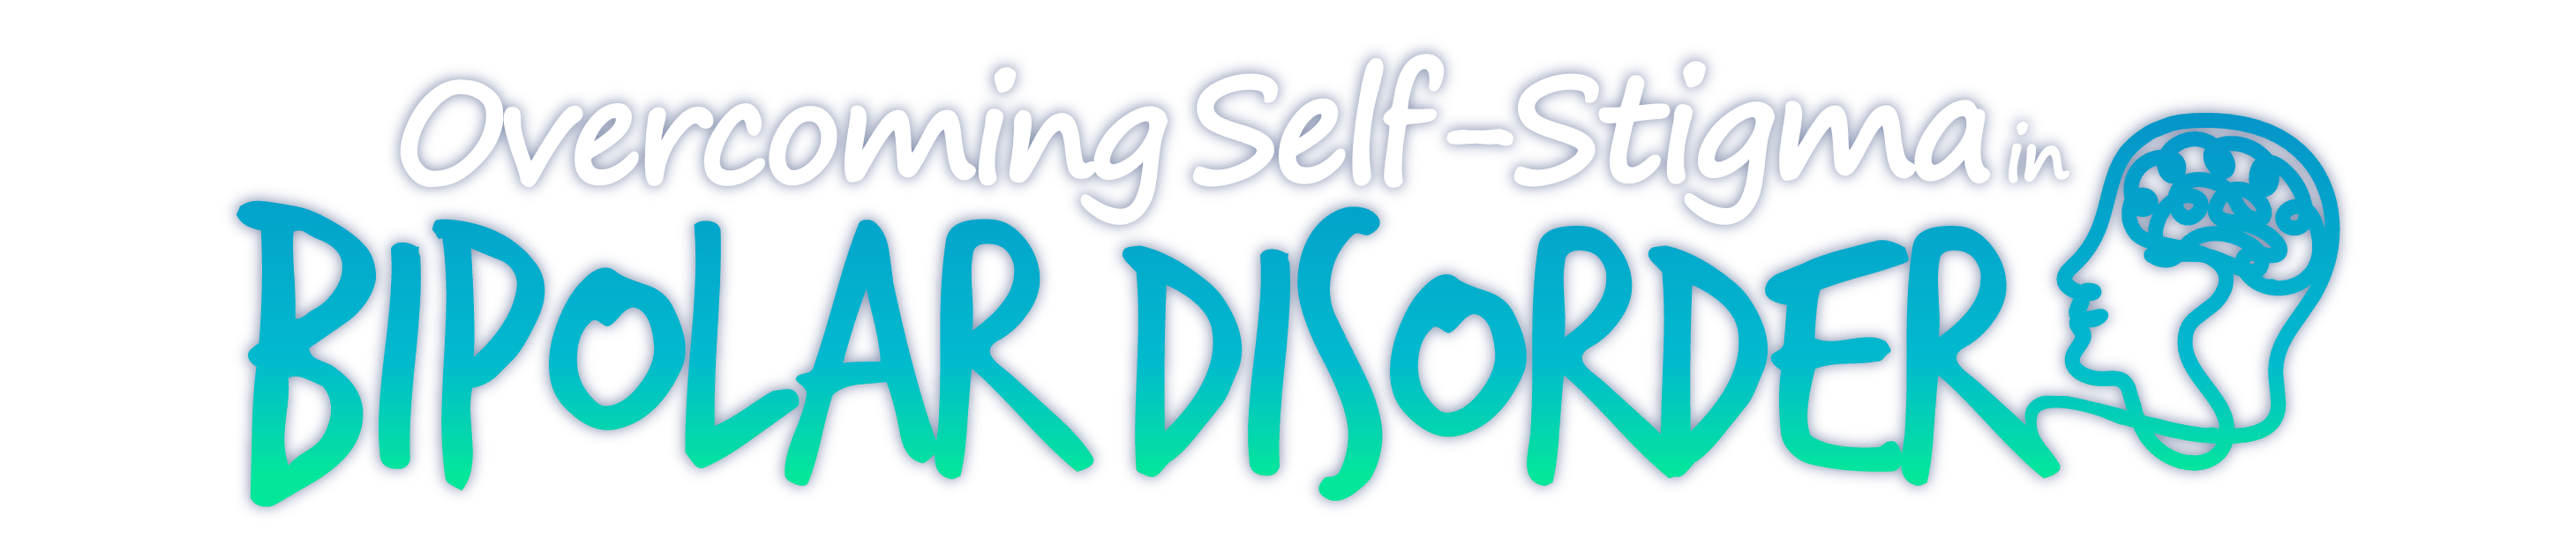 Overcoming Self-Stigma in Bipolar Disorder